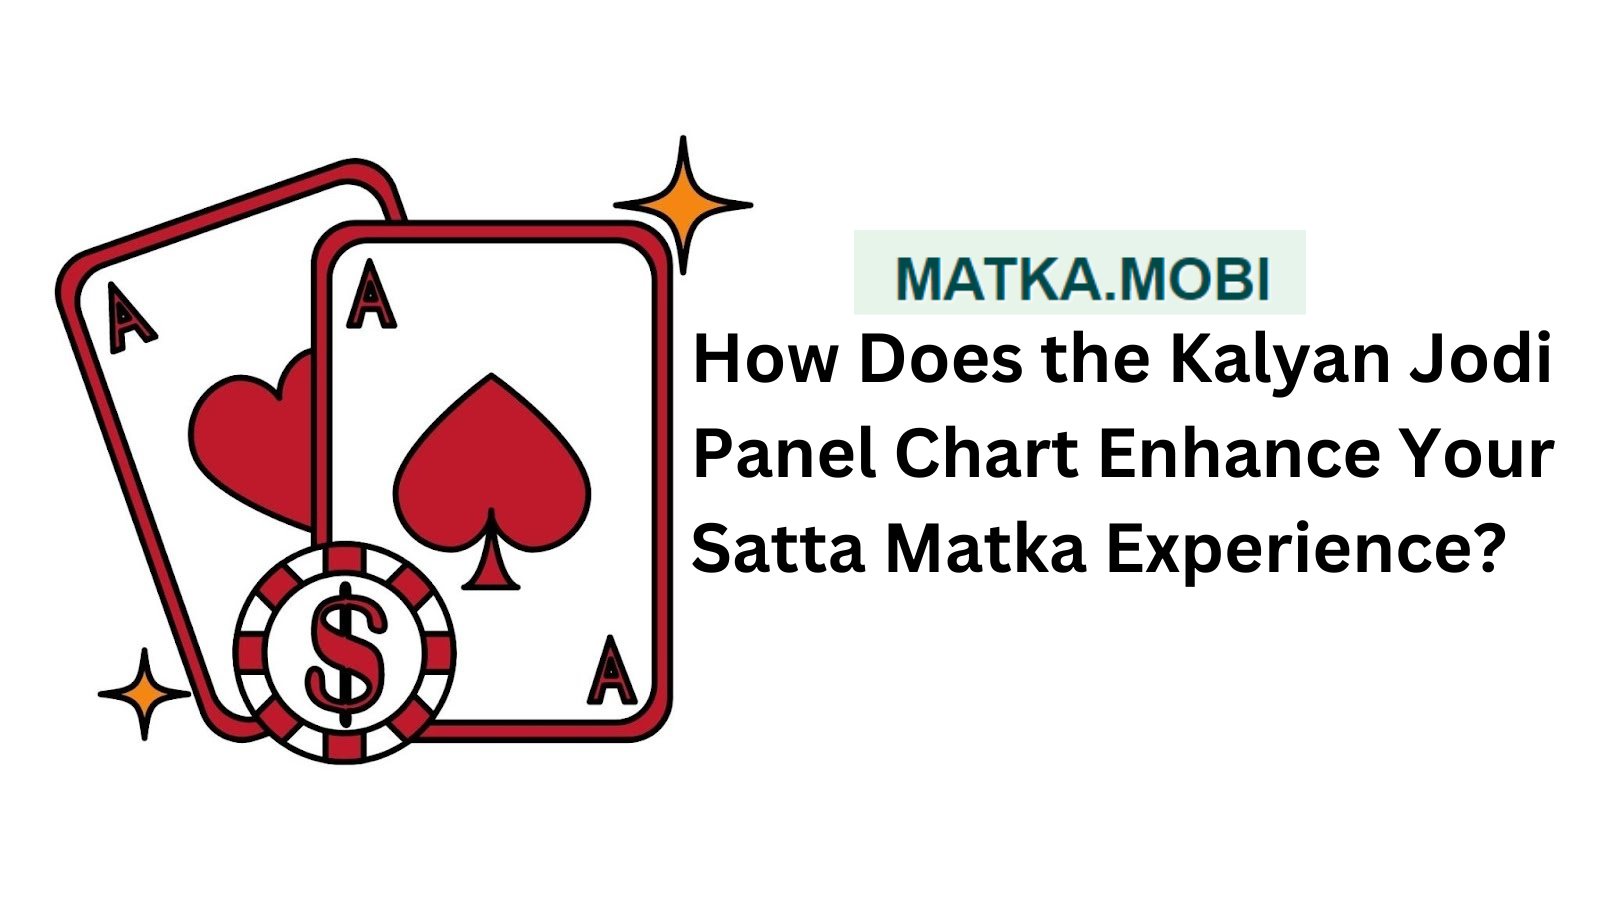 How Does the Kalyan Jodi Panel Chart Enhance Your Satta Matka Experience?